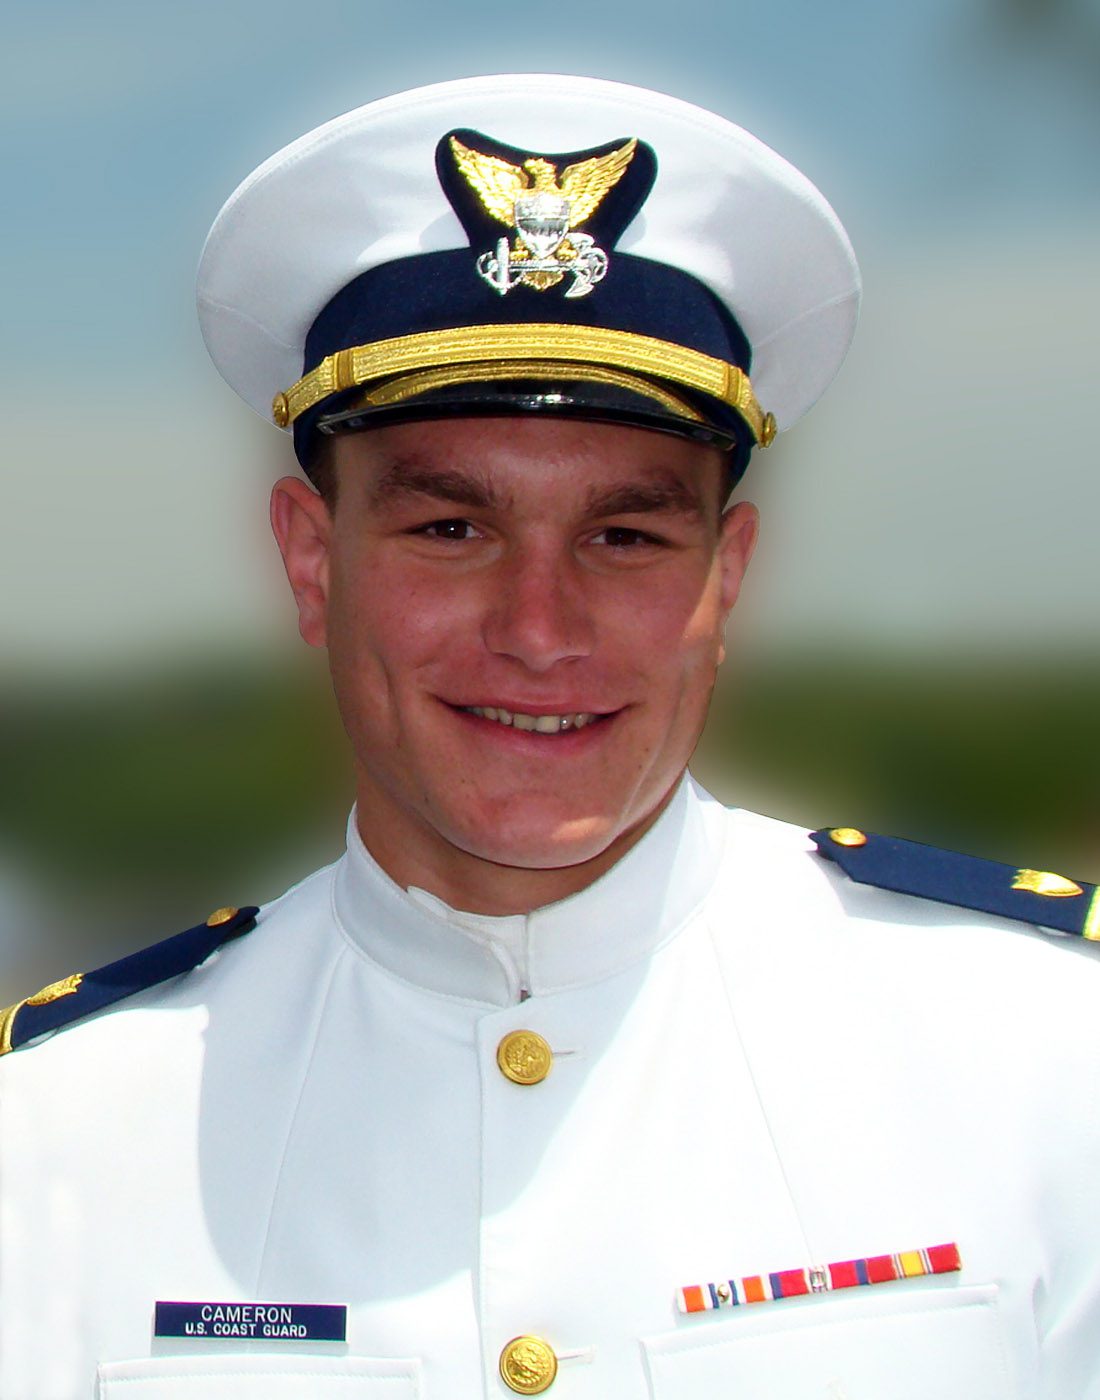 U.S. Coast Guard Lieutenant Junior Grade Thomas Cameron, 24, of Portland, Oregon